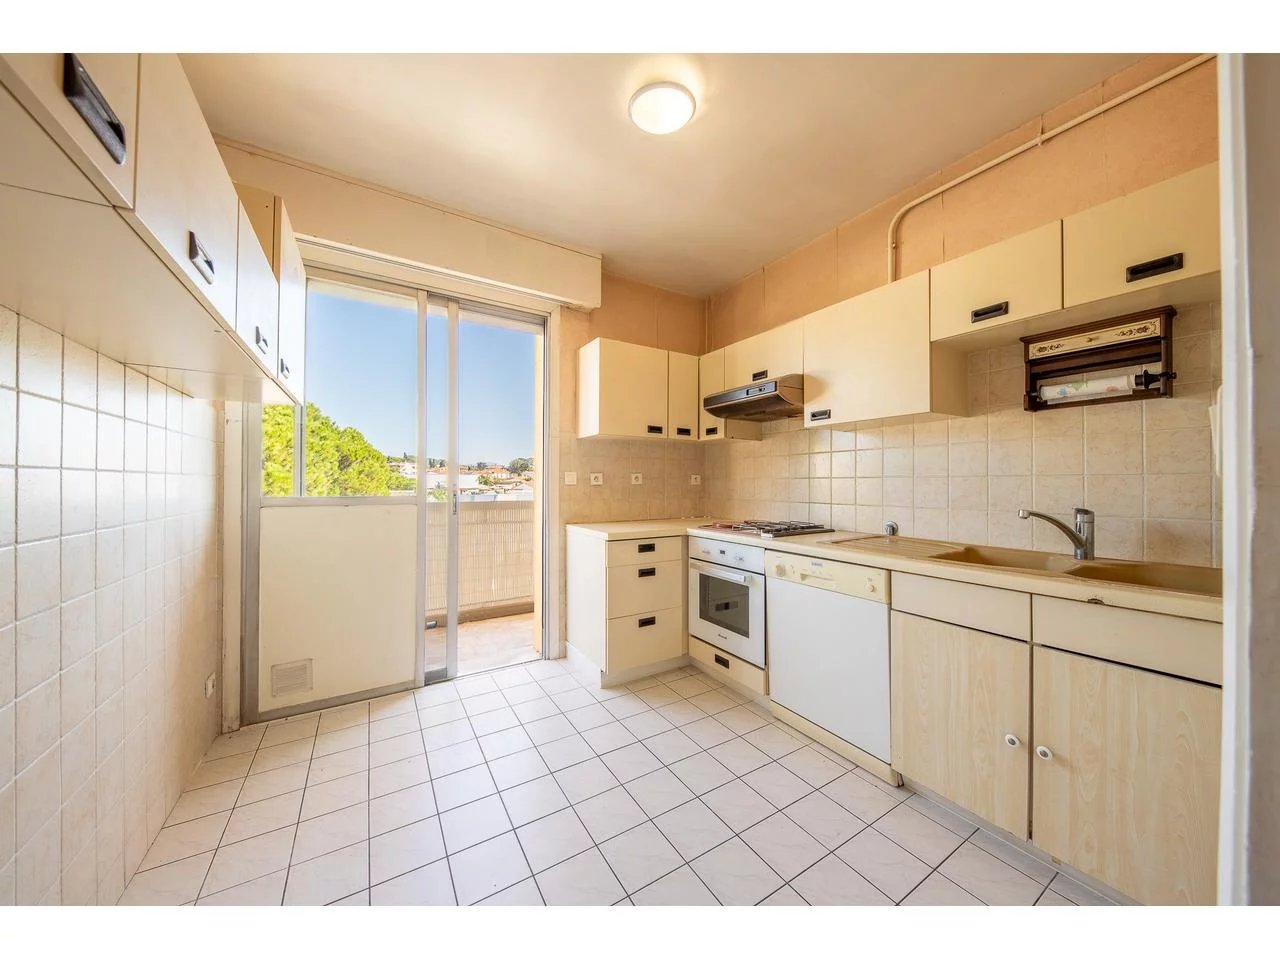 Appartement  3 Locali 71m2  In vendita   244 500 €